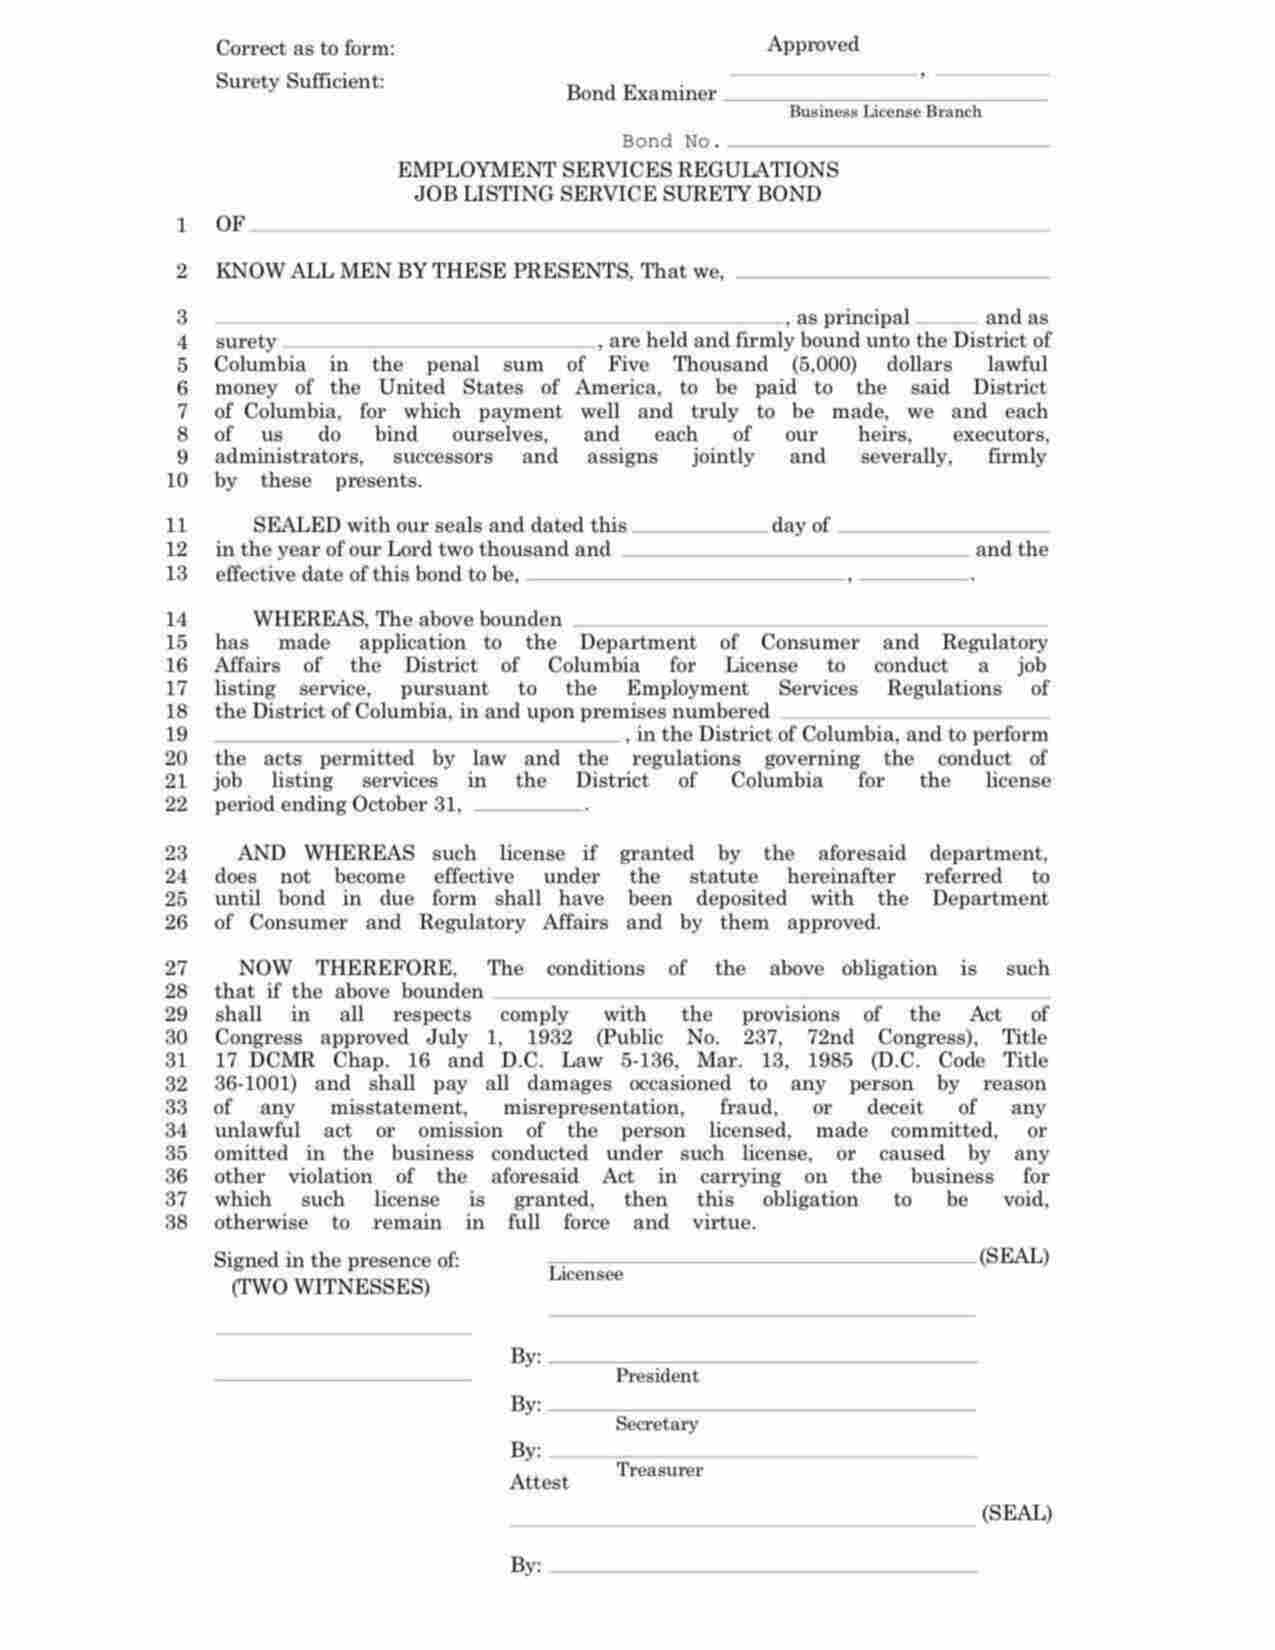 District of Columbia Job Listing Service Bond Form